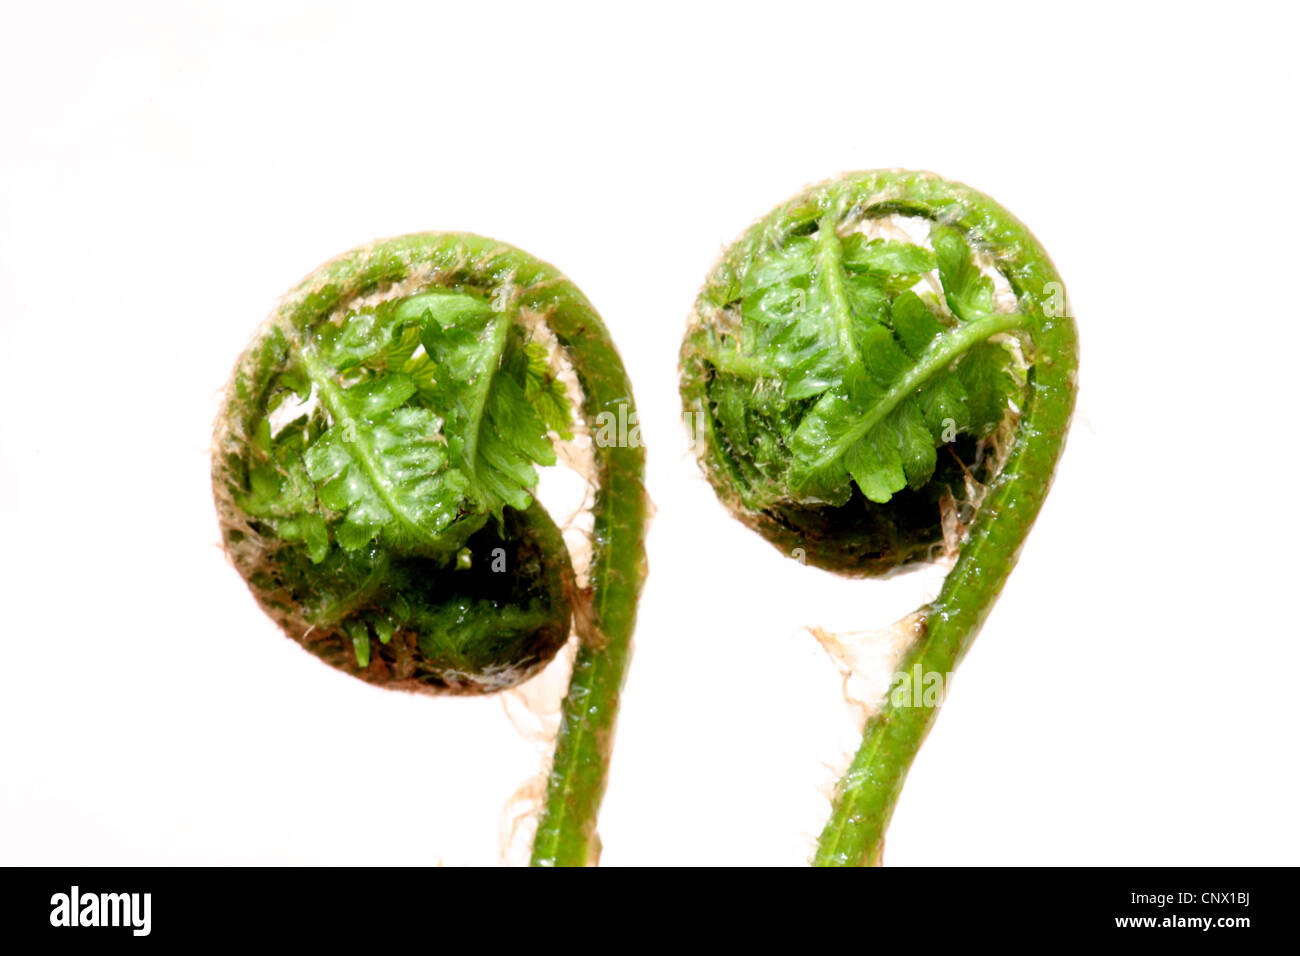 bracken fern (Pteridium aquilinum), developing fronds Stock Photo